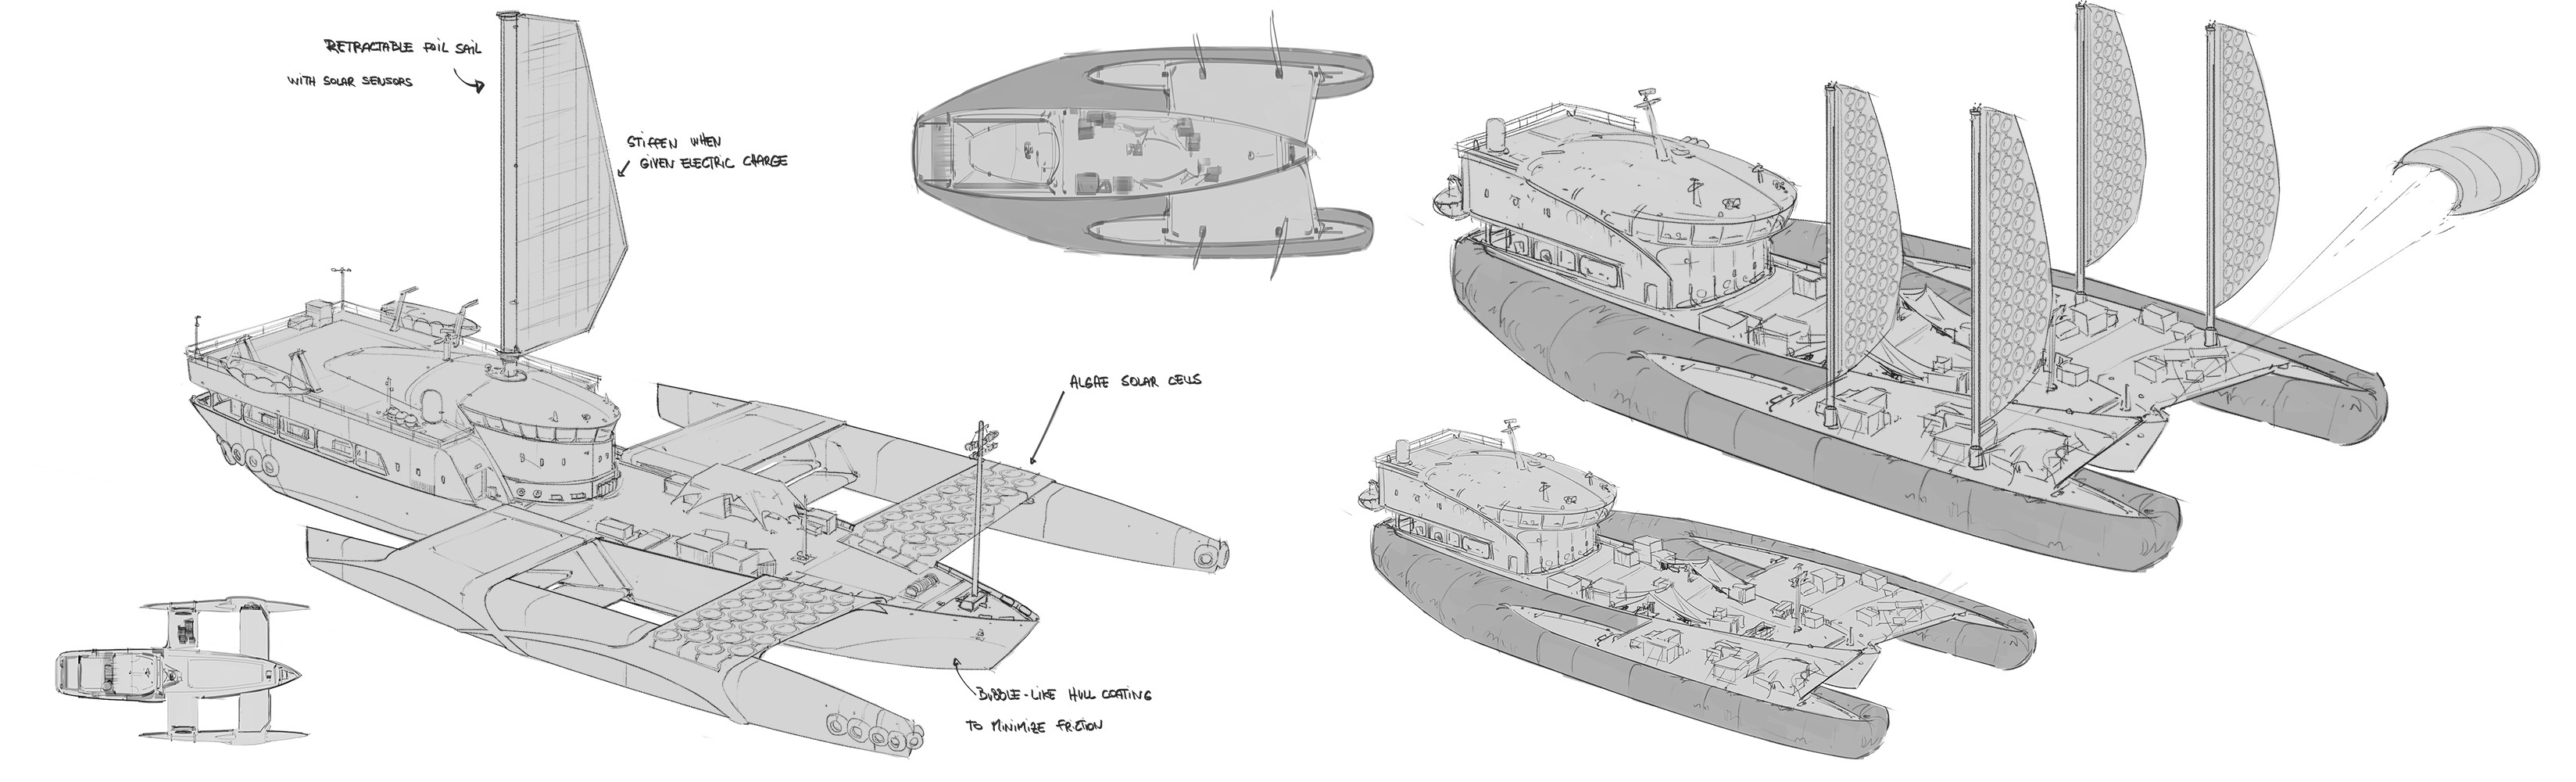 RaftBoat sketches